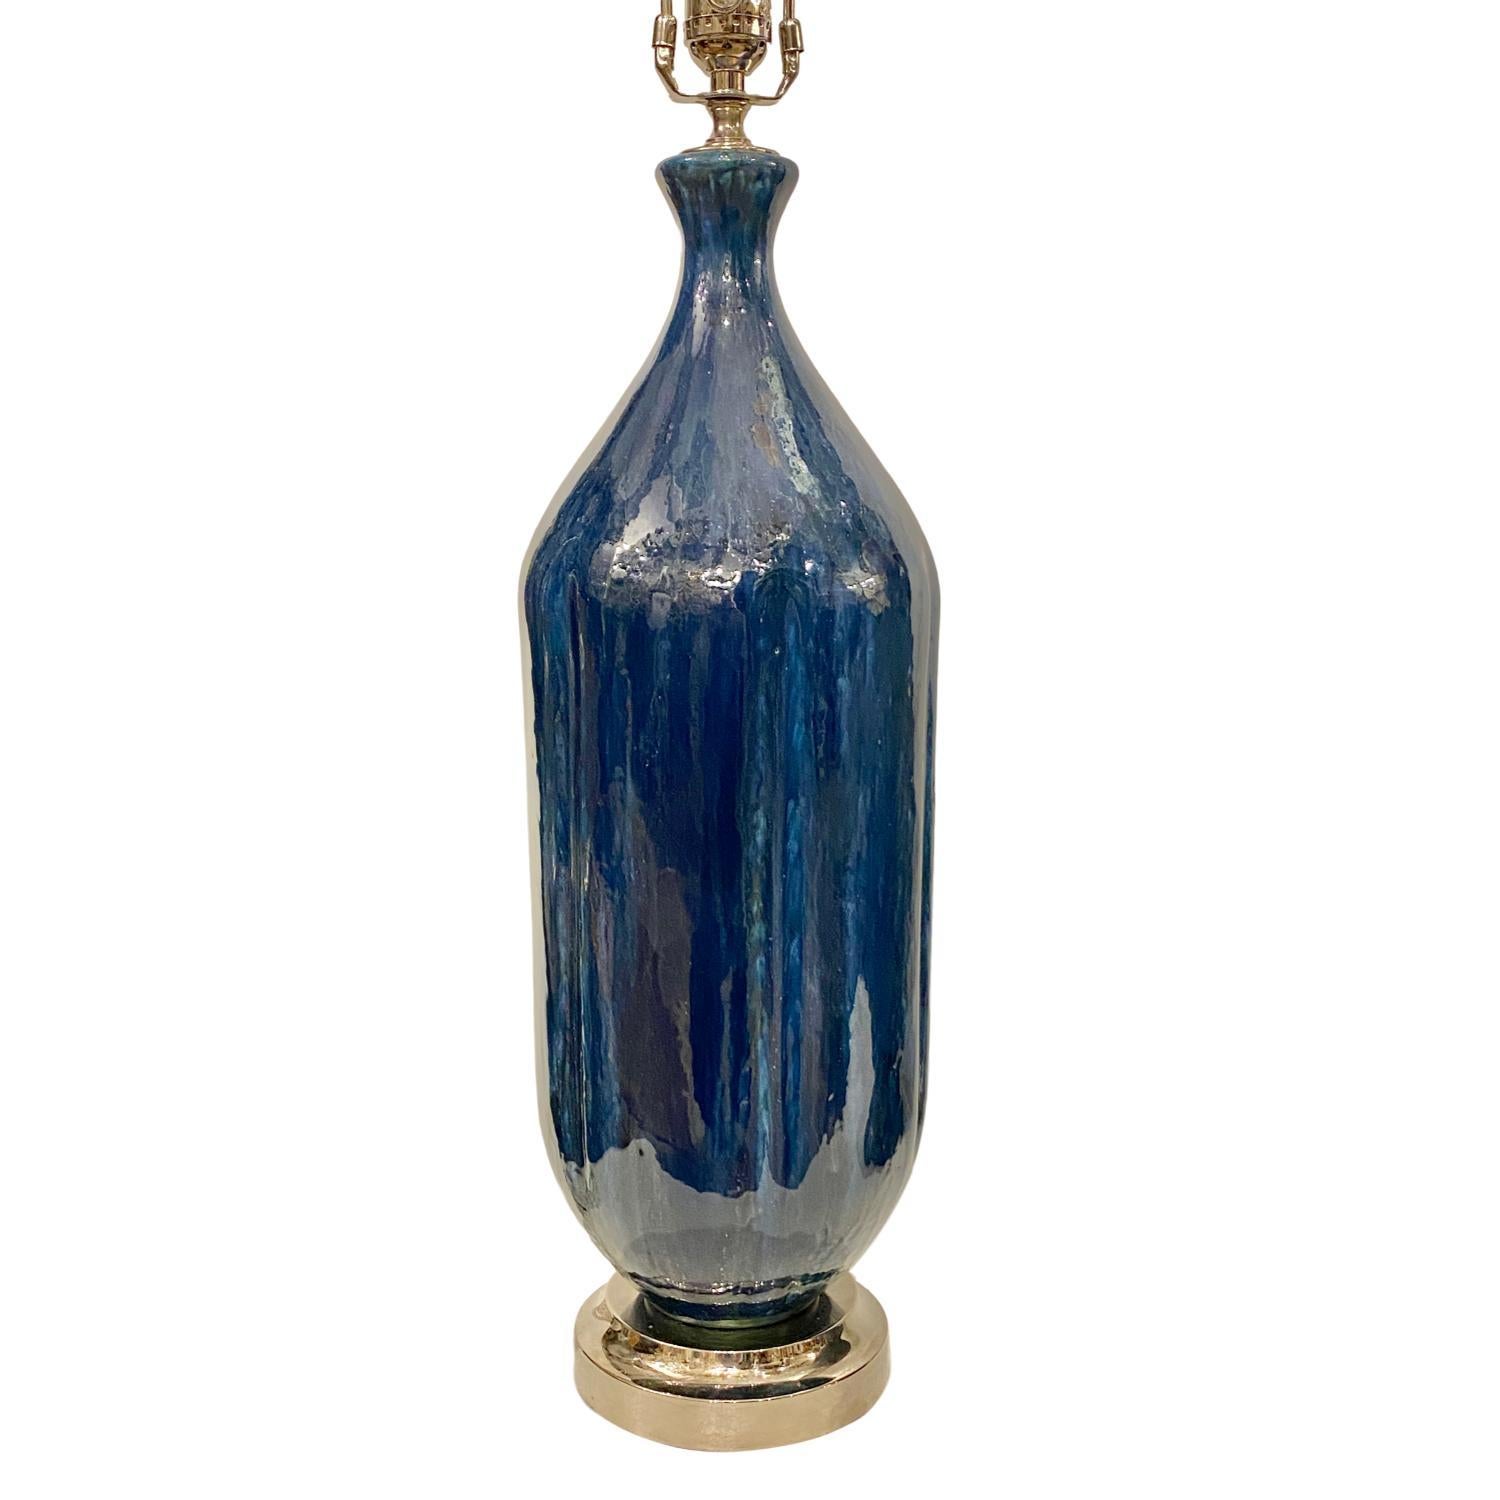 A single circa 1960s Italian blue glazed porcelain table lamp.

Measurements:
Height of body 22